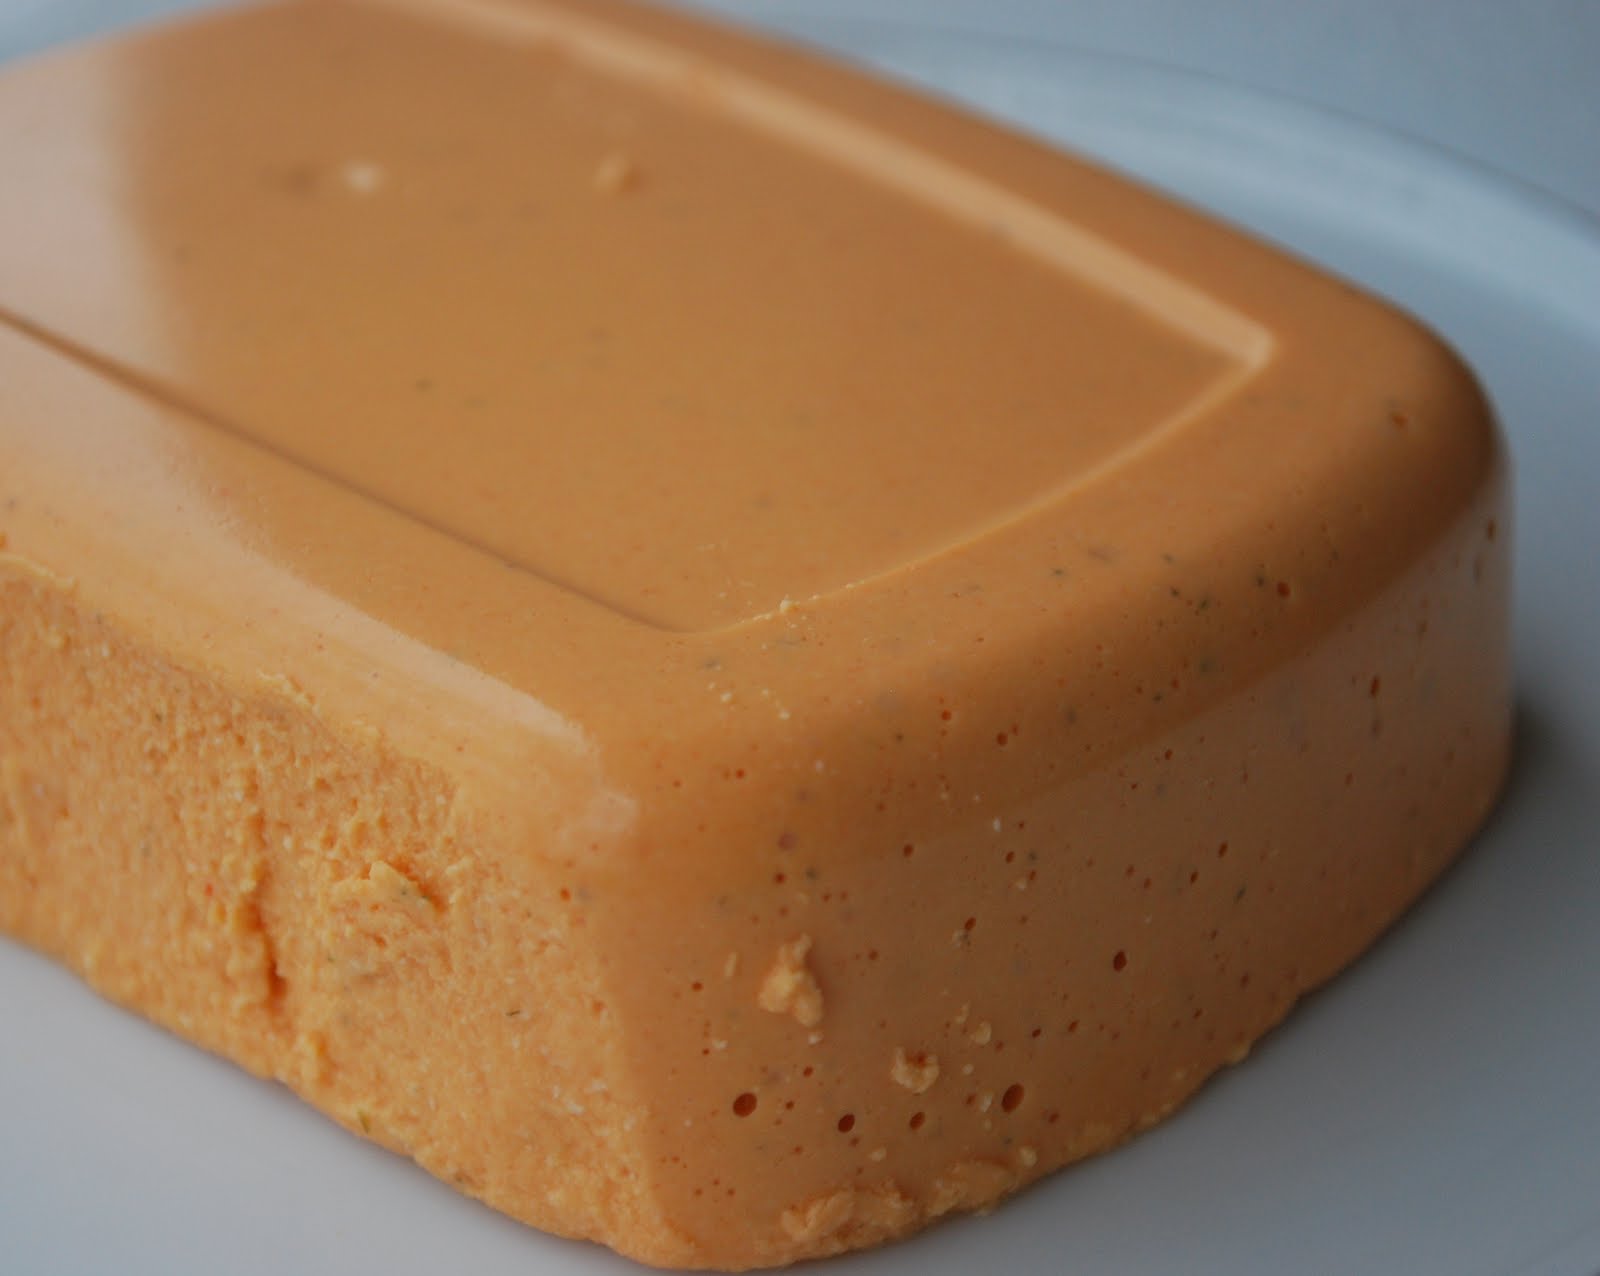 Perfect Orange Color Block for Soap Making